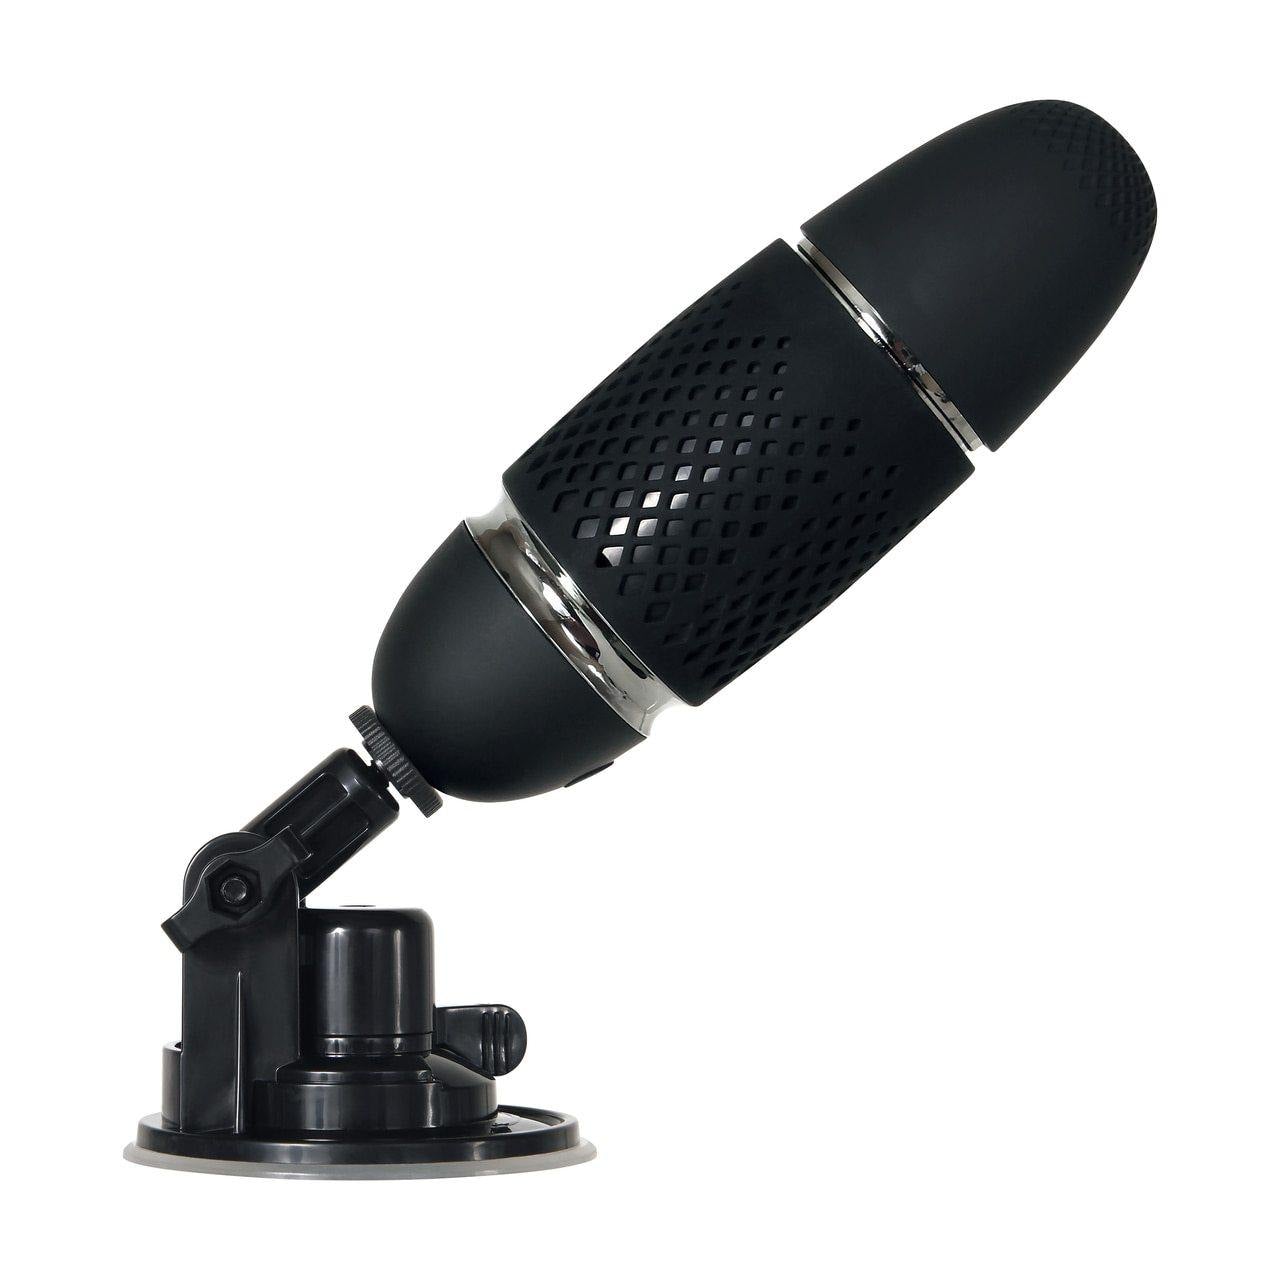 Thrust & Go Rechargeable G-Spot Vibrator - Warranty - 2 Shaft Attachments - Boink Adult Boutique www.boinkmuskoka.com